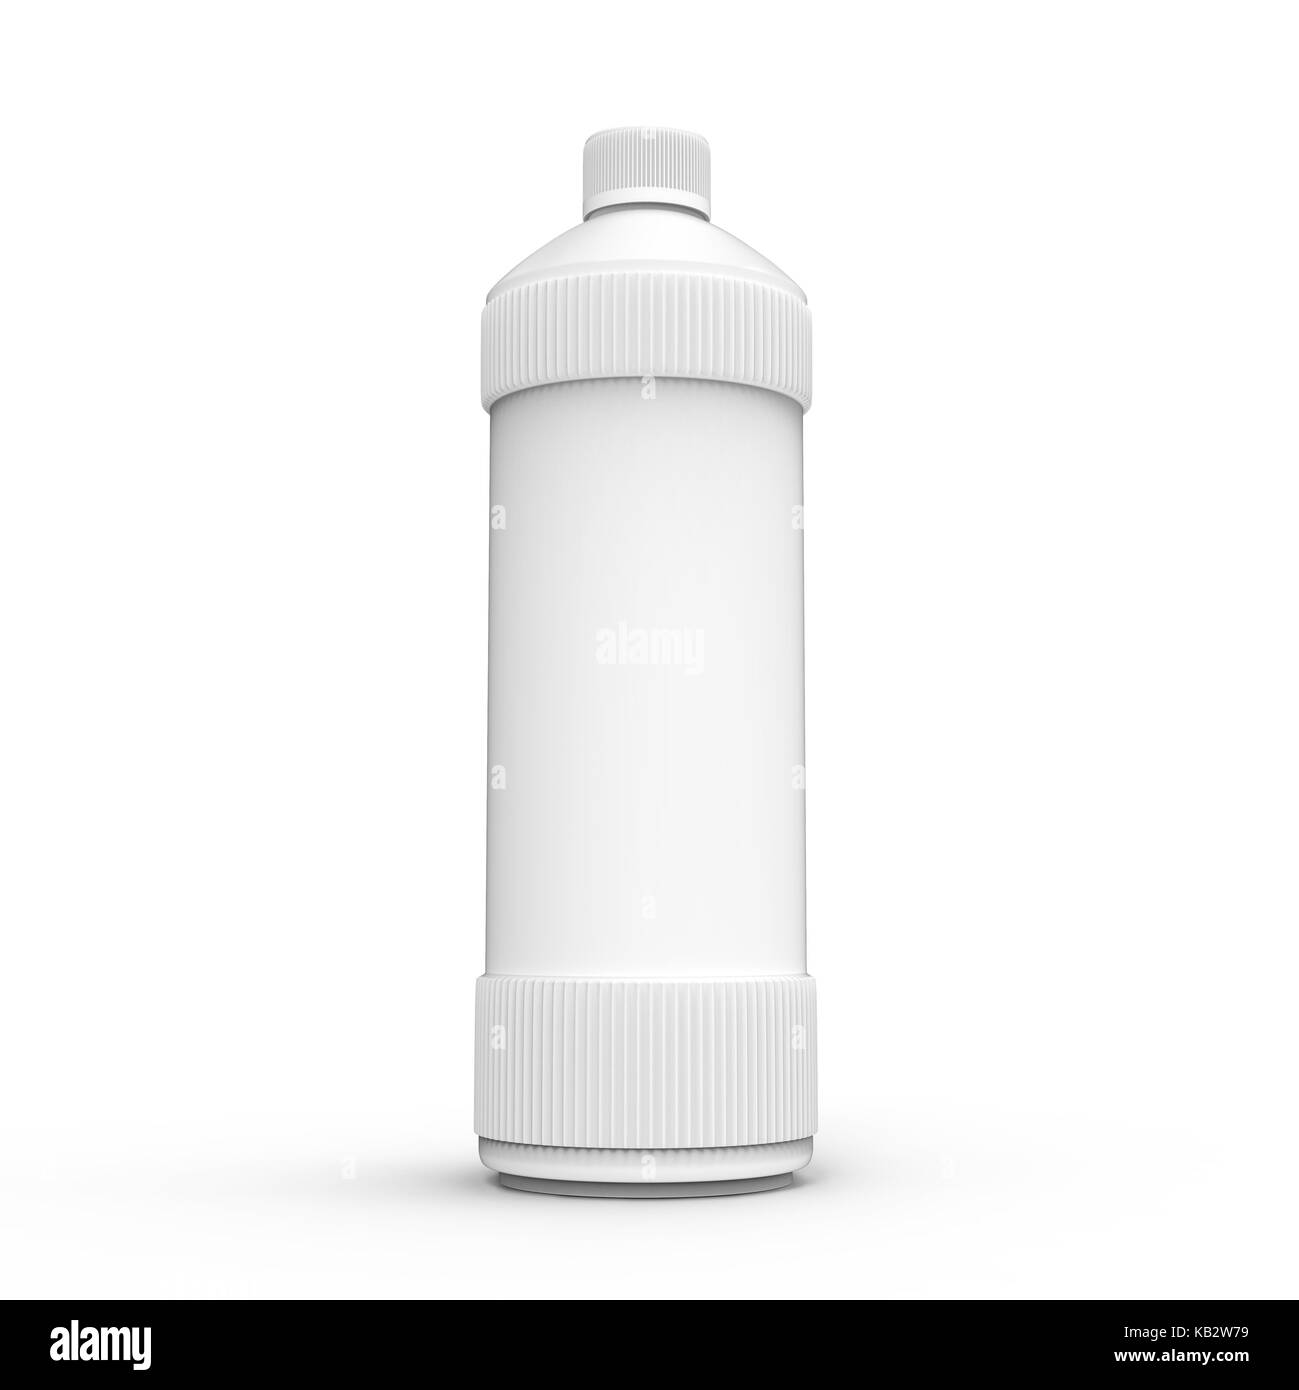 https://c8.alamy.com/comp/KB2W79/blank-detergent-bottle-mockup-drain-cleaner-plastic-bottle-isolated-KB2W79.jpg